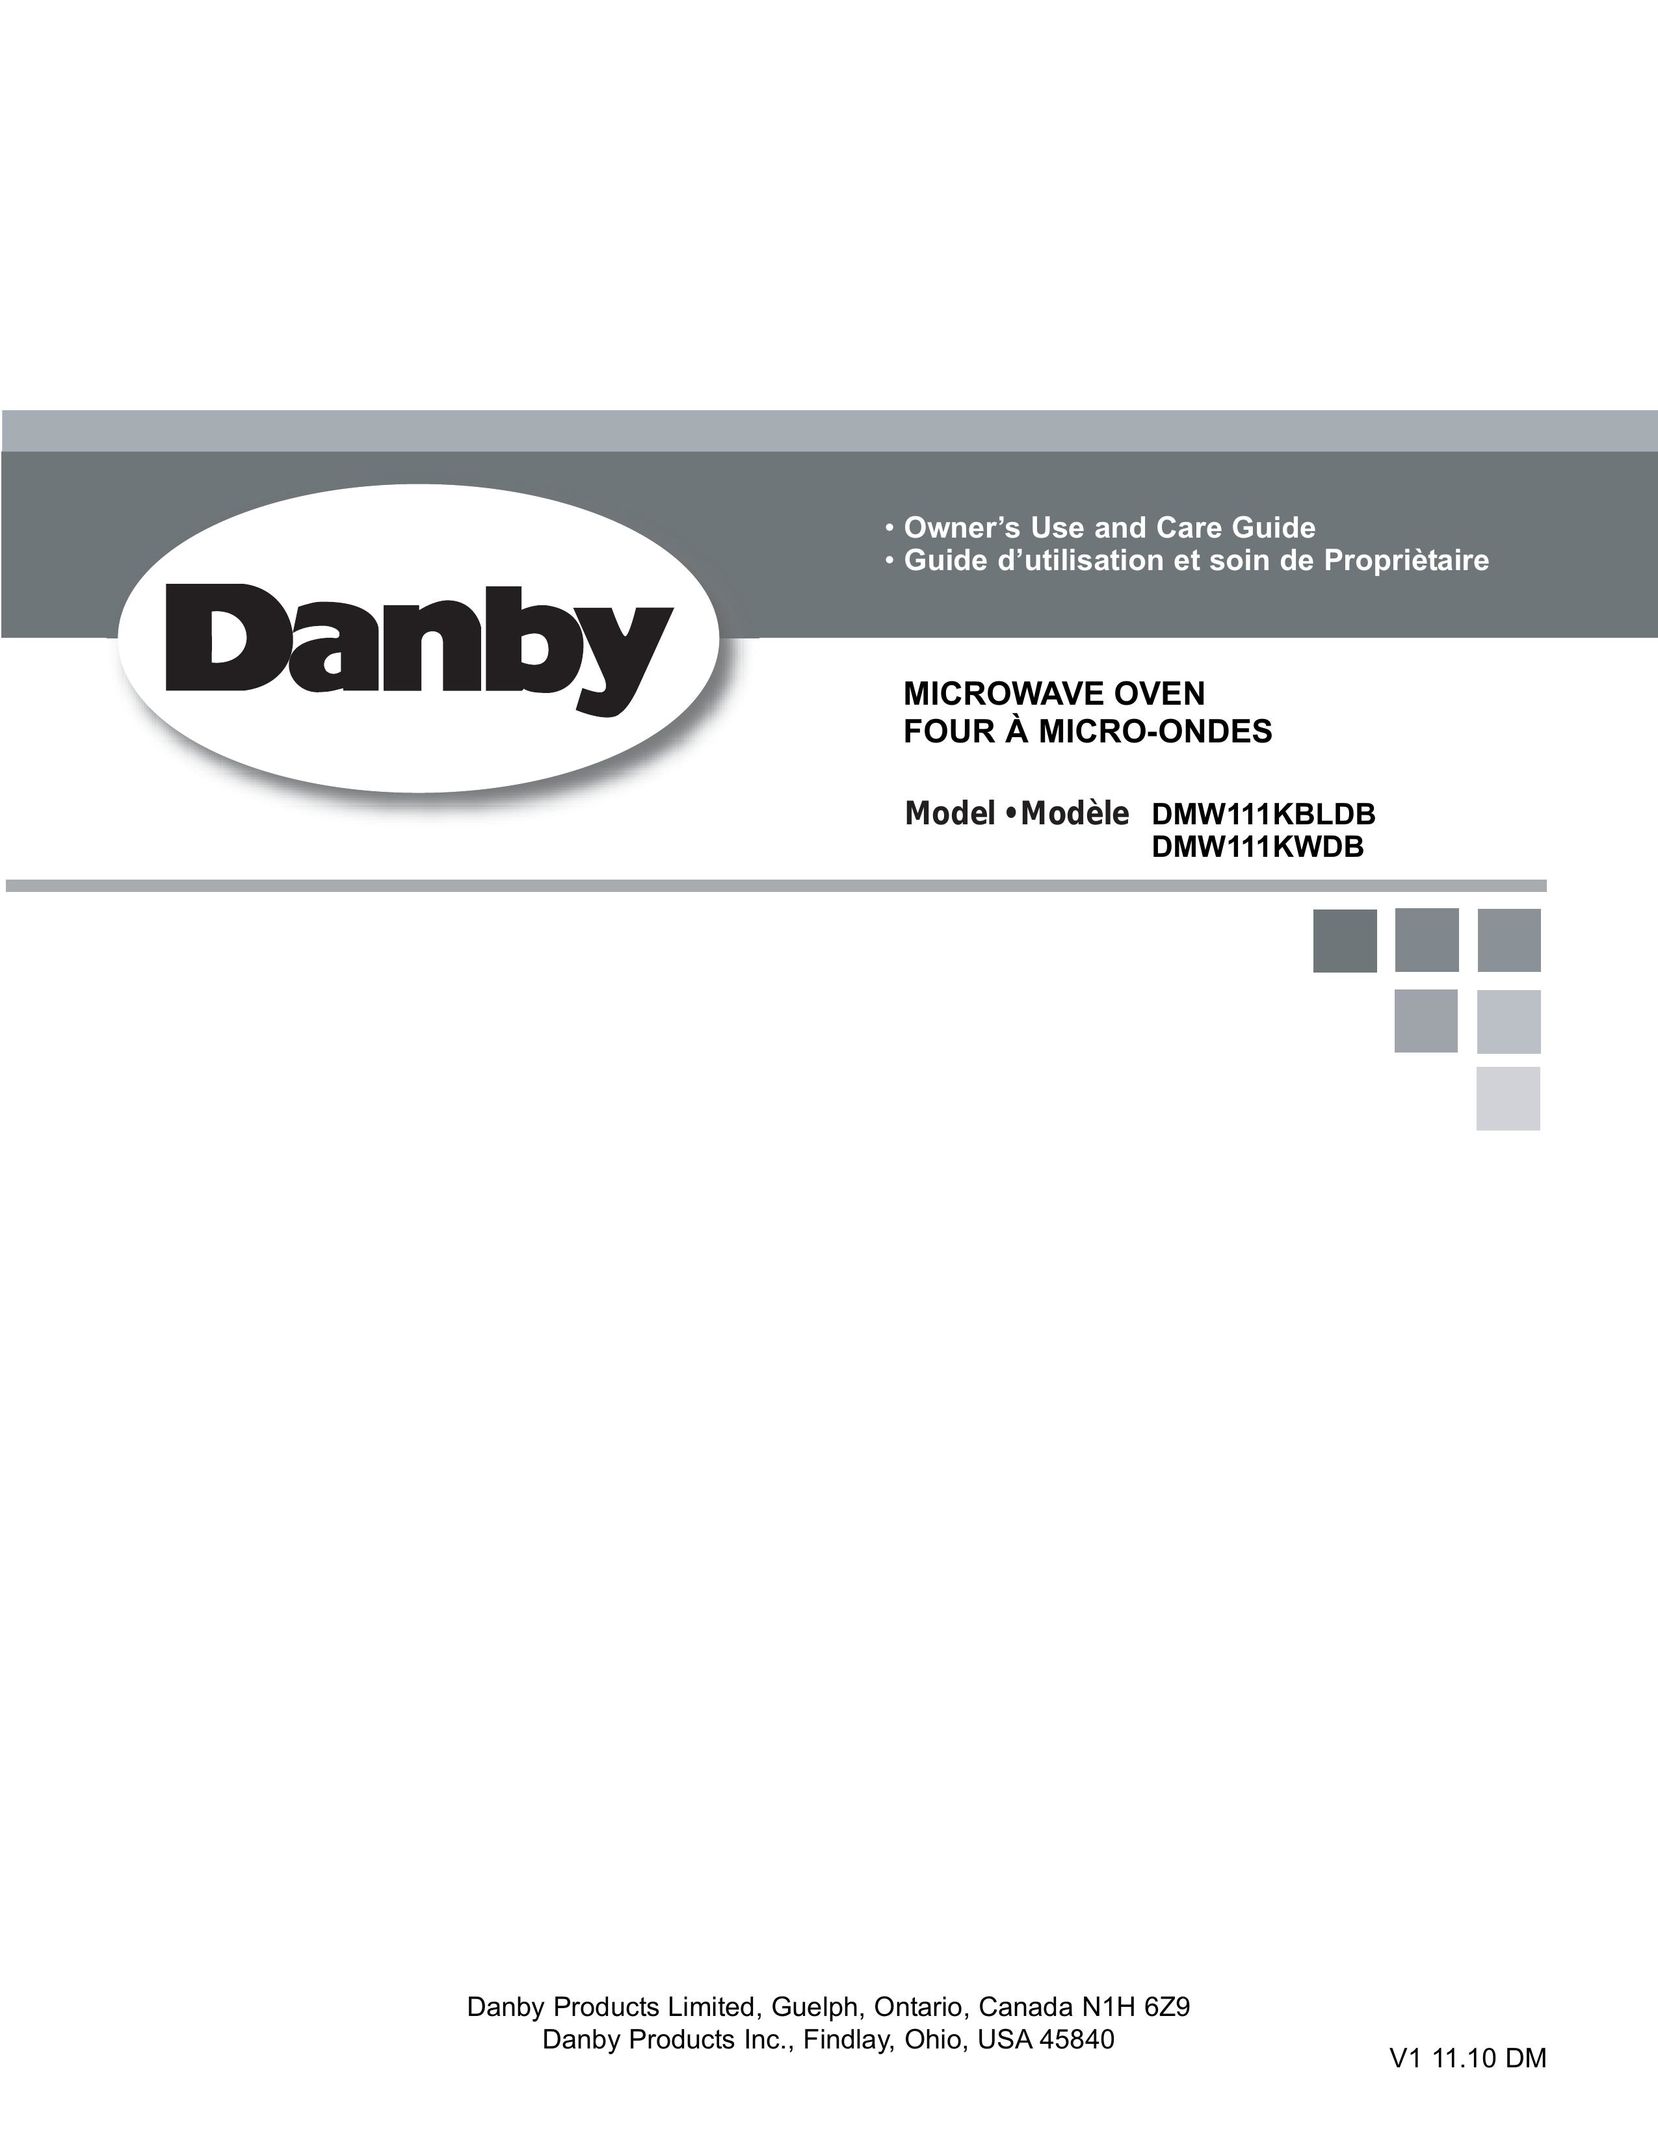 Danby DMW111KWDB Microwave Oven User Manual